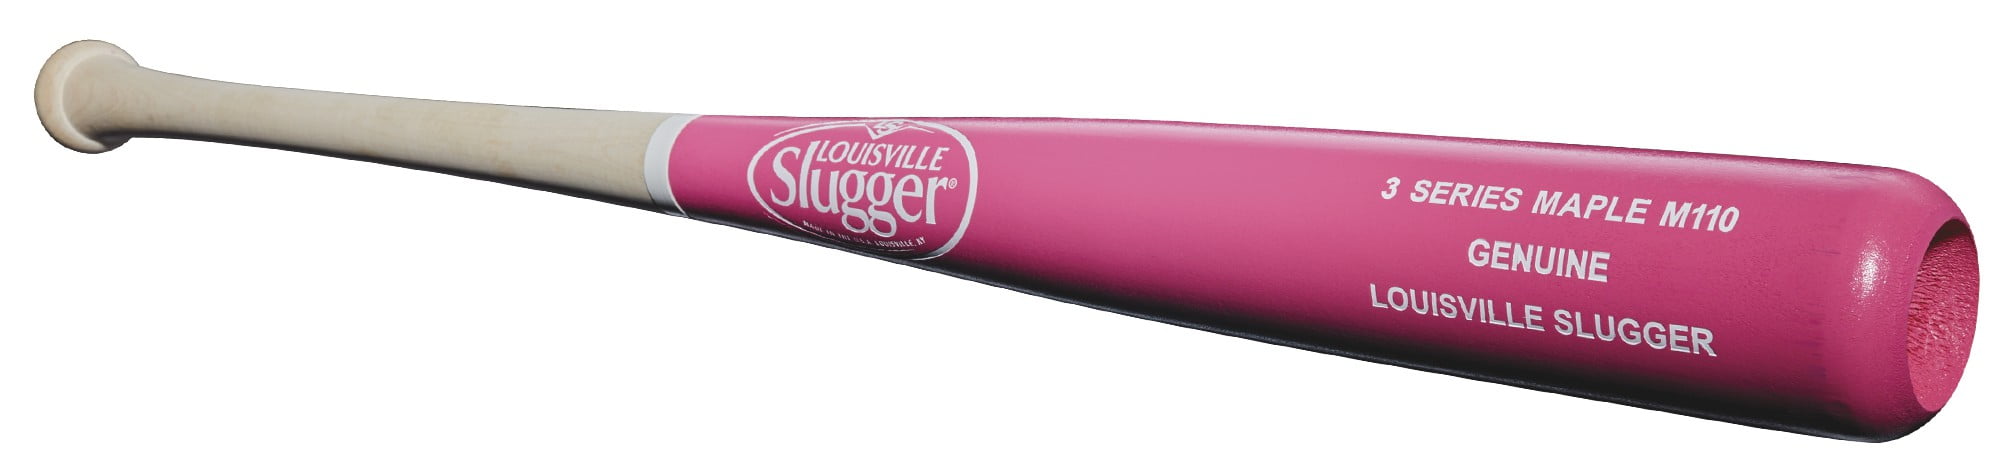 Louisville Slugger Genuine S3 Maple M110 Wood Bat, Natural/Pink